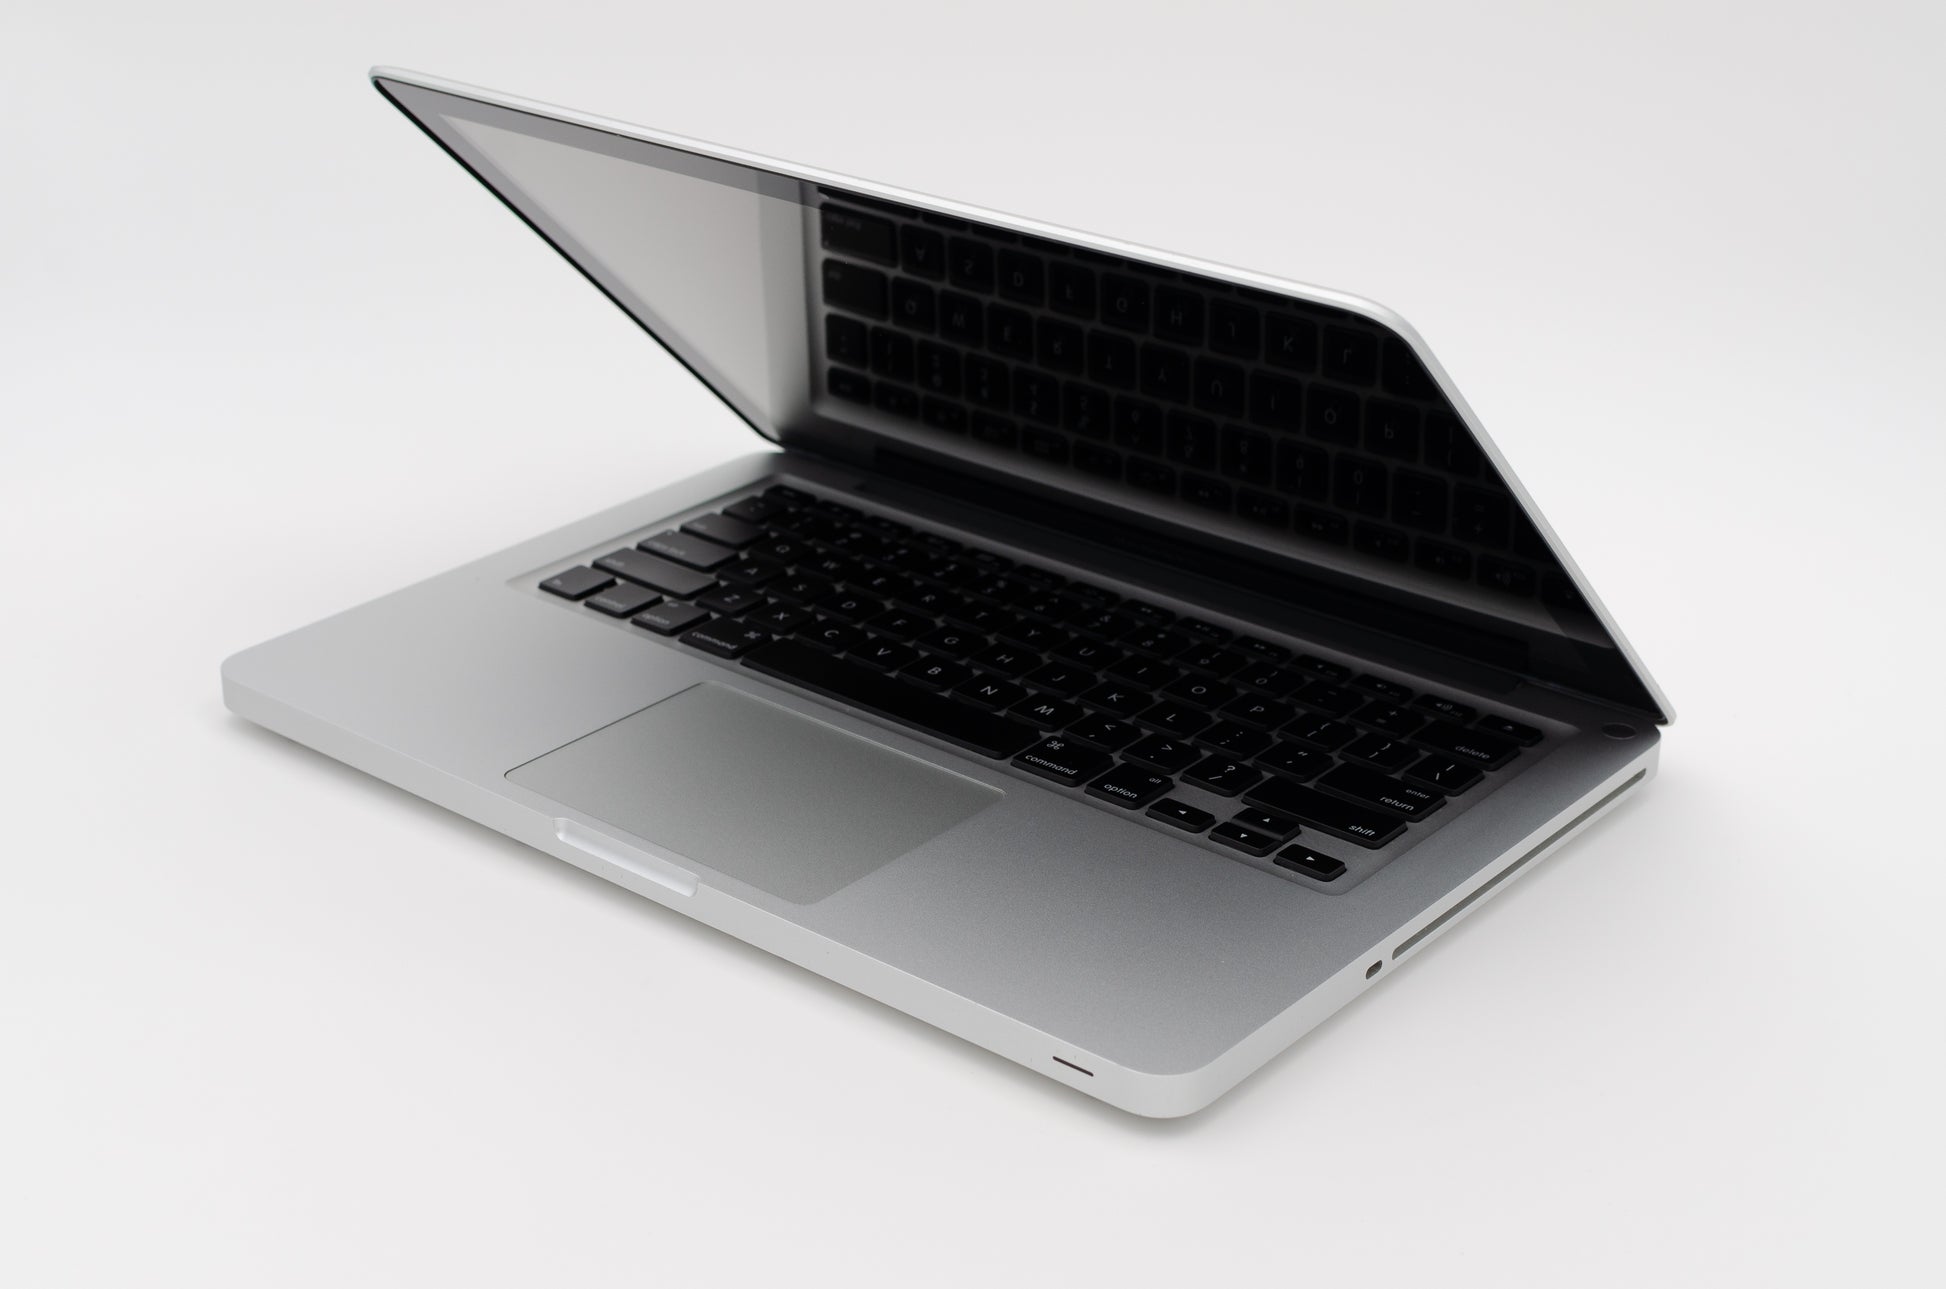 apple-early-2013-13.3-inch-macbook-pro-a1425-aluminum-dci7 - 3ghz processor, 8gb ram, hd 4000 - 512mb gpu-me662ll/a-5